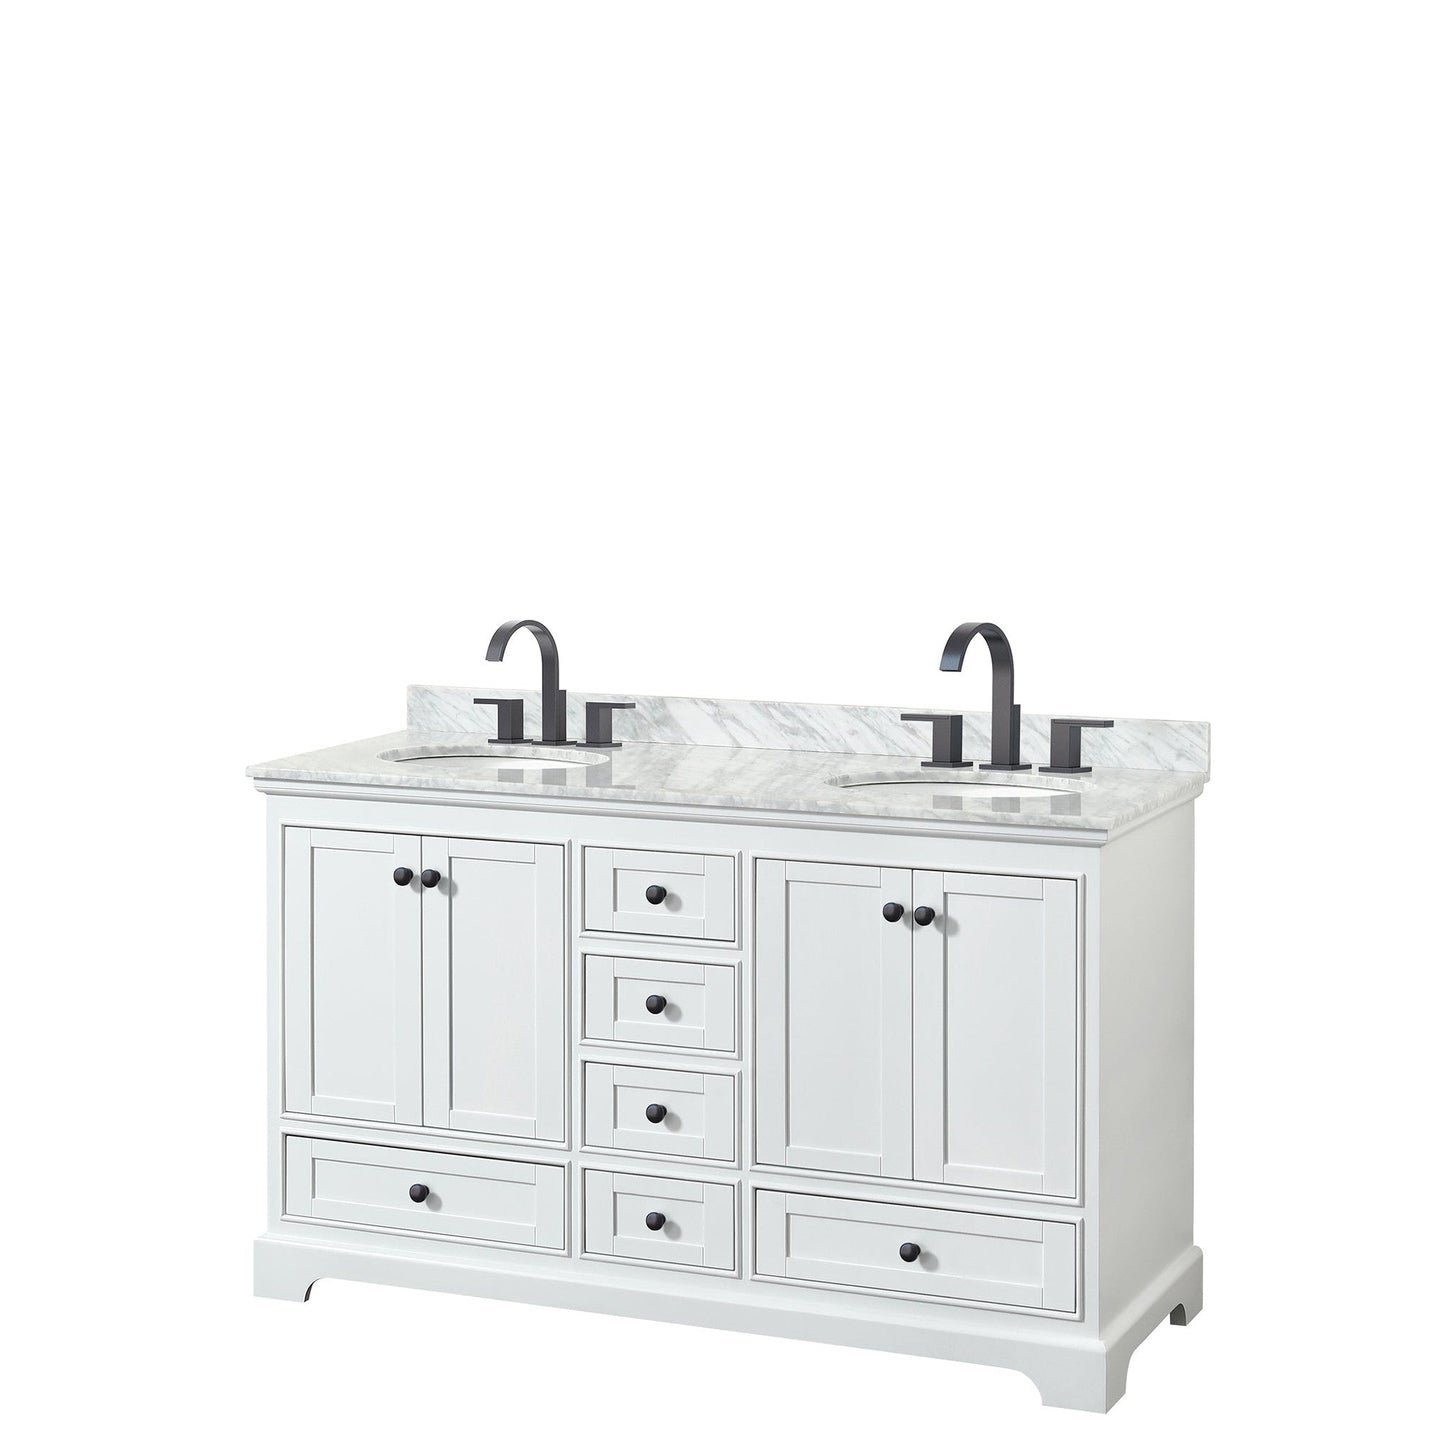 Deborah 60" Double Bathroom Vanity in White, White Carrara Marble Countertop, Undermount Oval Sinks, Matte Black Trim